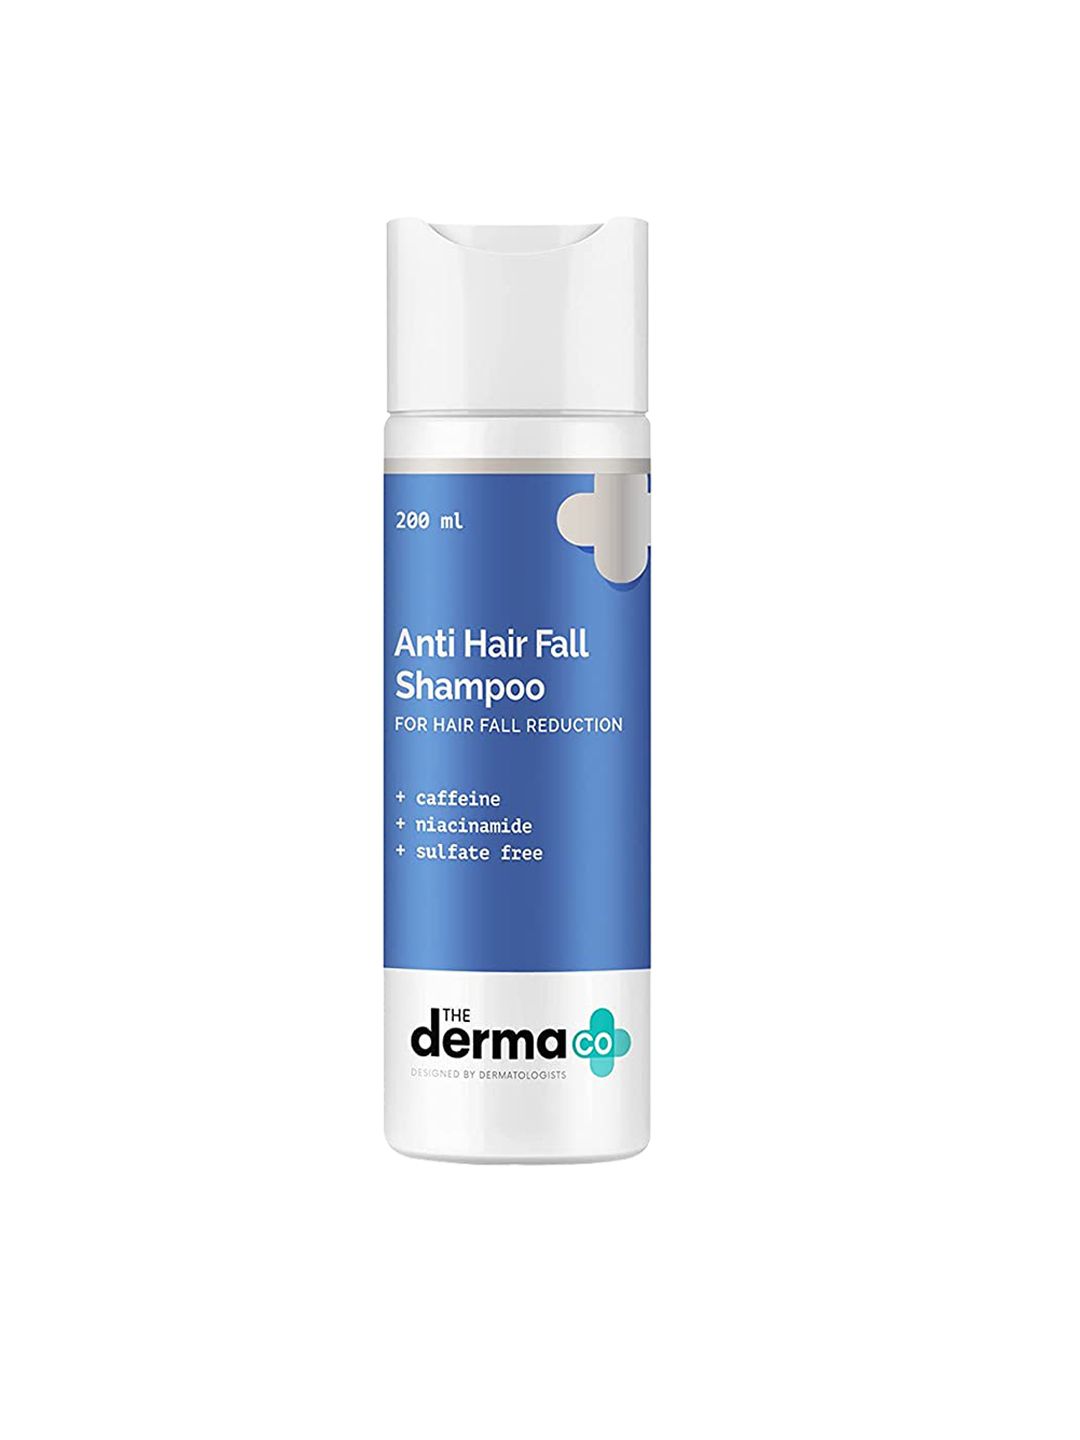 The Derma co. Anti-Hair Fall Shampoo with Caffeine & Niacinamide - 200 ml Price in India